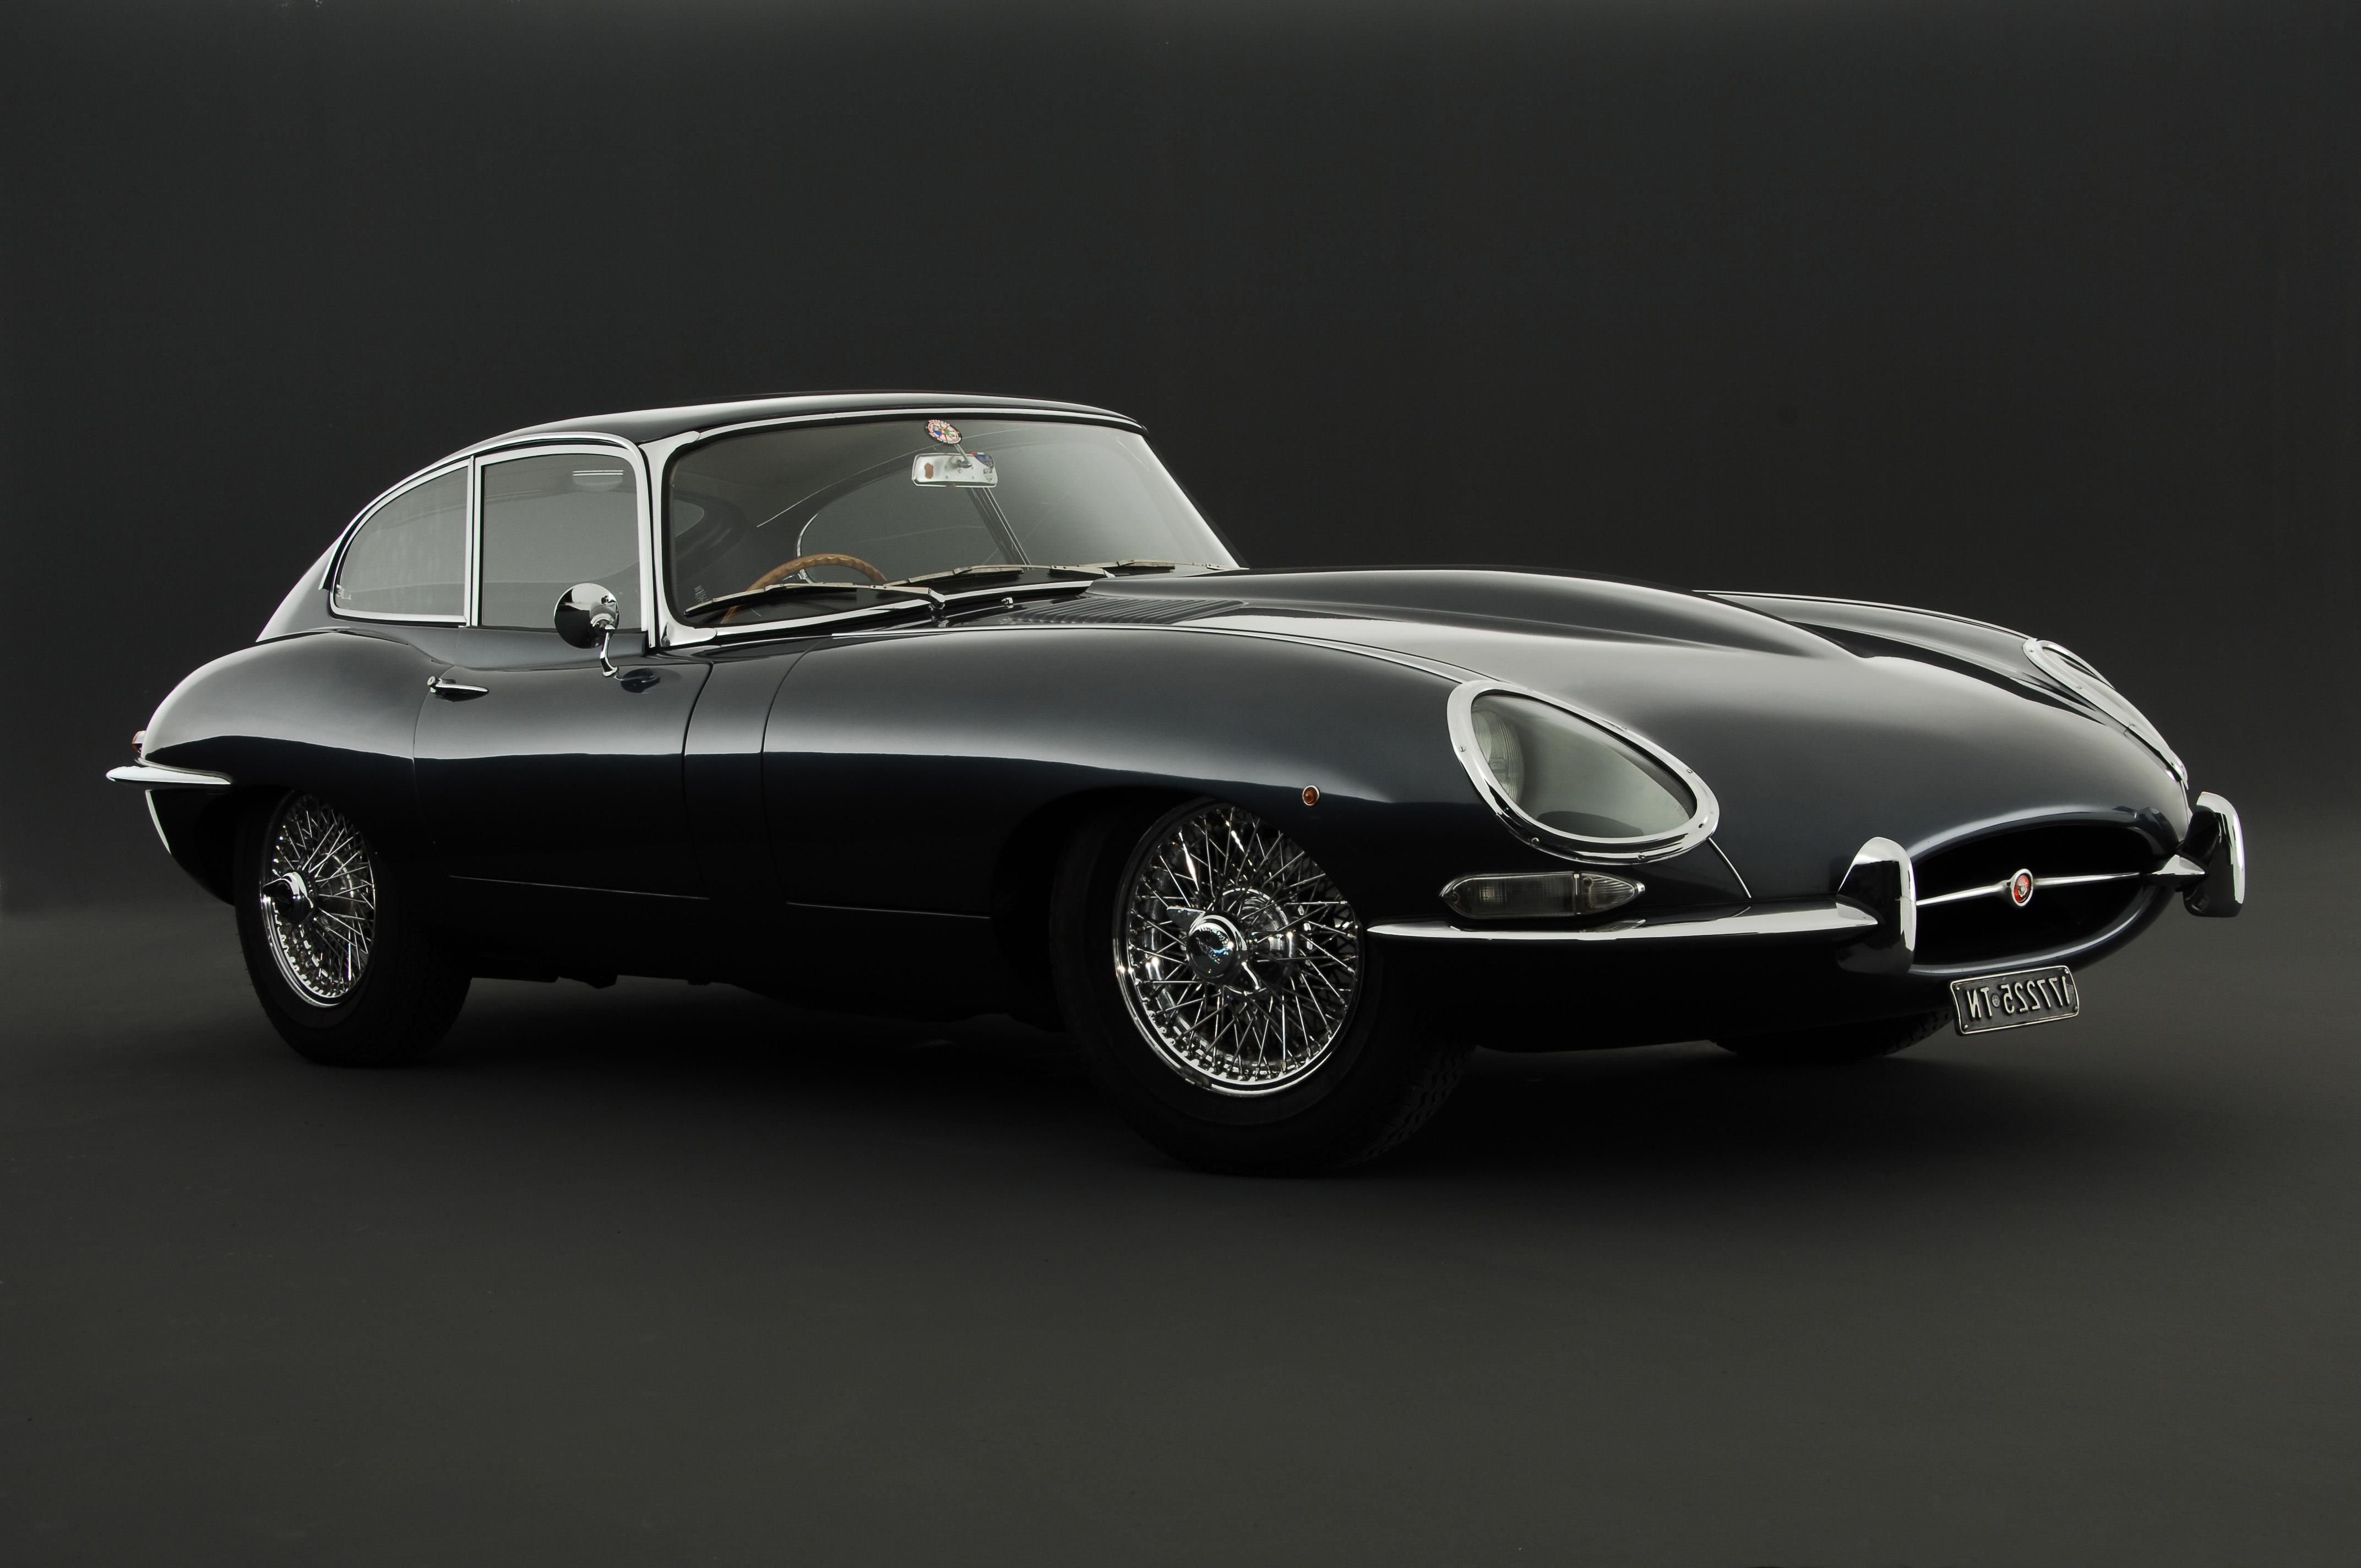 Jaguar E-Type Wallpapers Images Photos Pictures Backgrounds